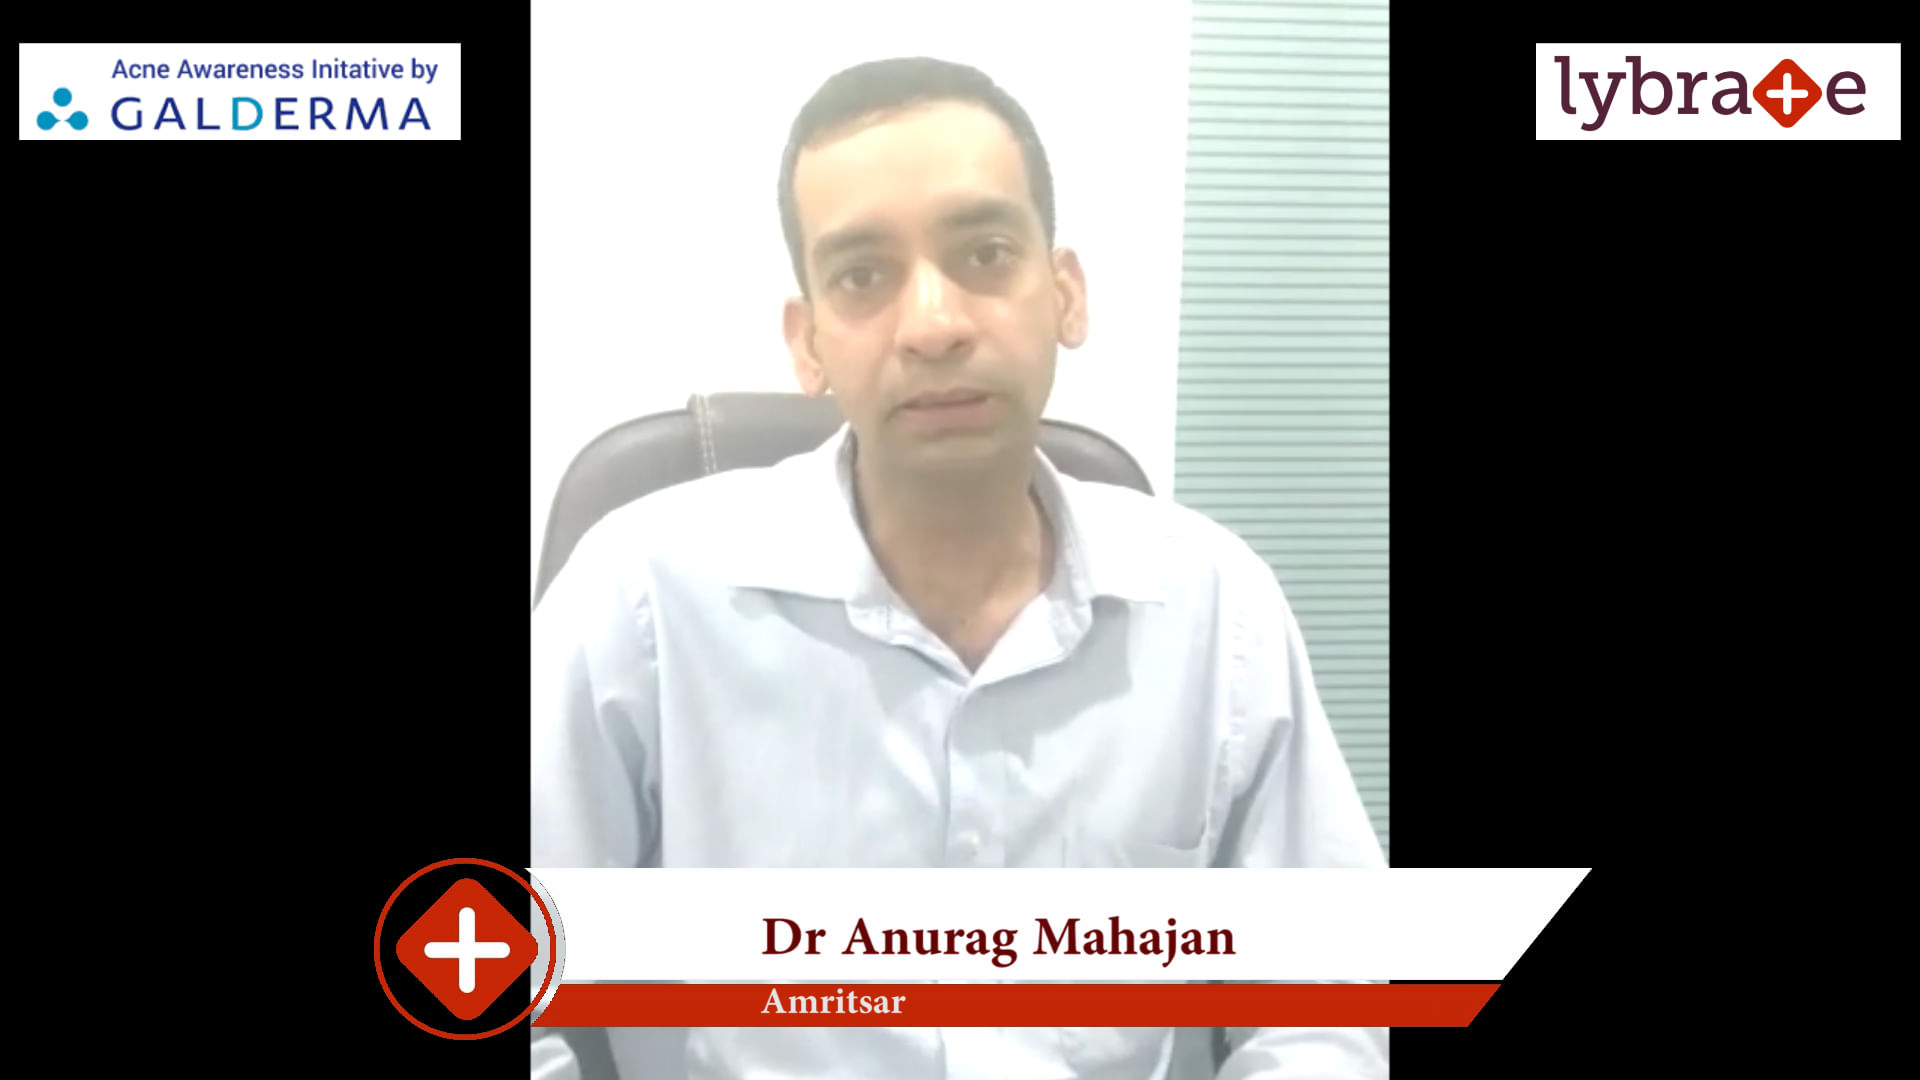 Lybrate | Dr. Anurag Mahajan speaks on IMPORTANCE OF TREATING ACNE EARLY